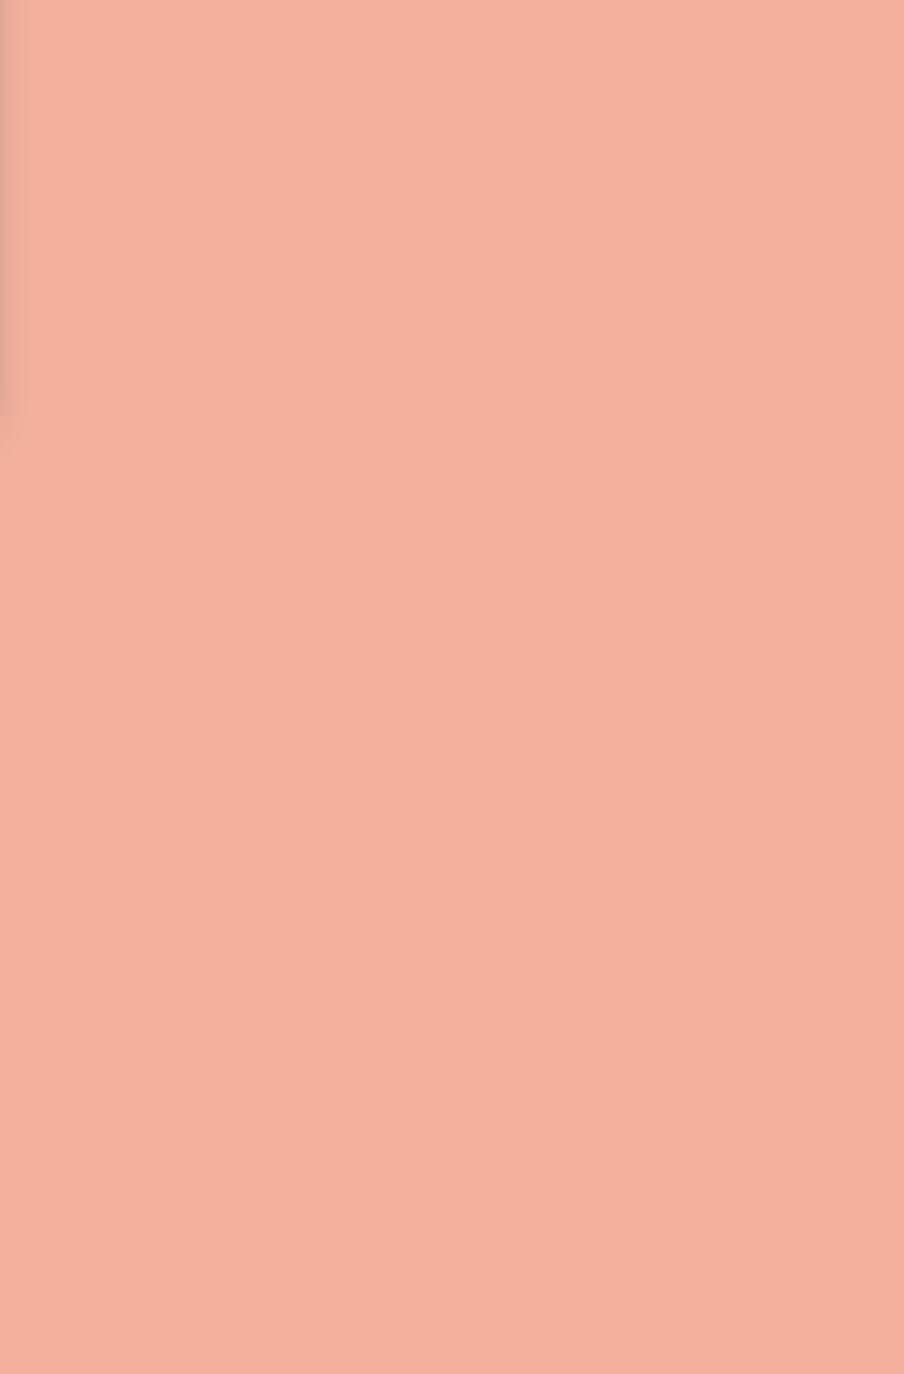 Free download Peach Color iPhone HD Wallpaper iPhone HD Wallpaper download  iPhone 340x510 for your Desktop Mobile  Tablet  Explore 46 Peach  Colored Wallpaper  Princess Peach Wallpaper Colored Backgrounds Peach  Wallpaper